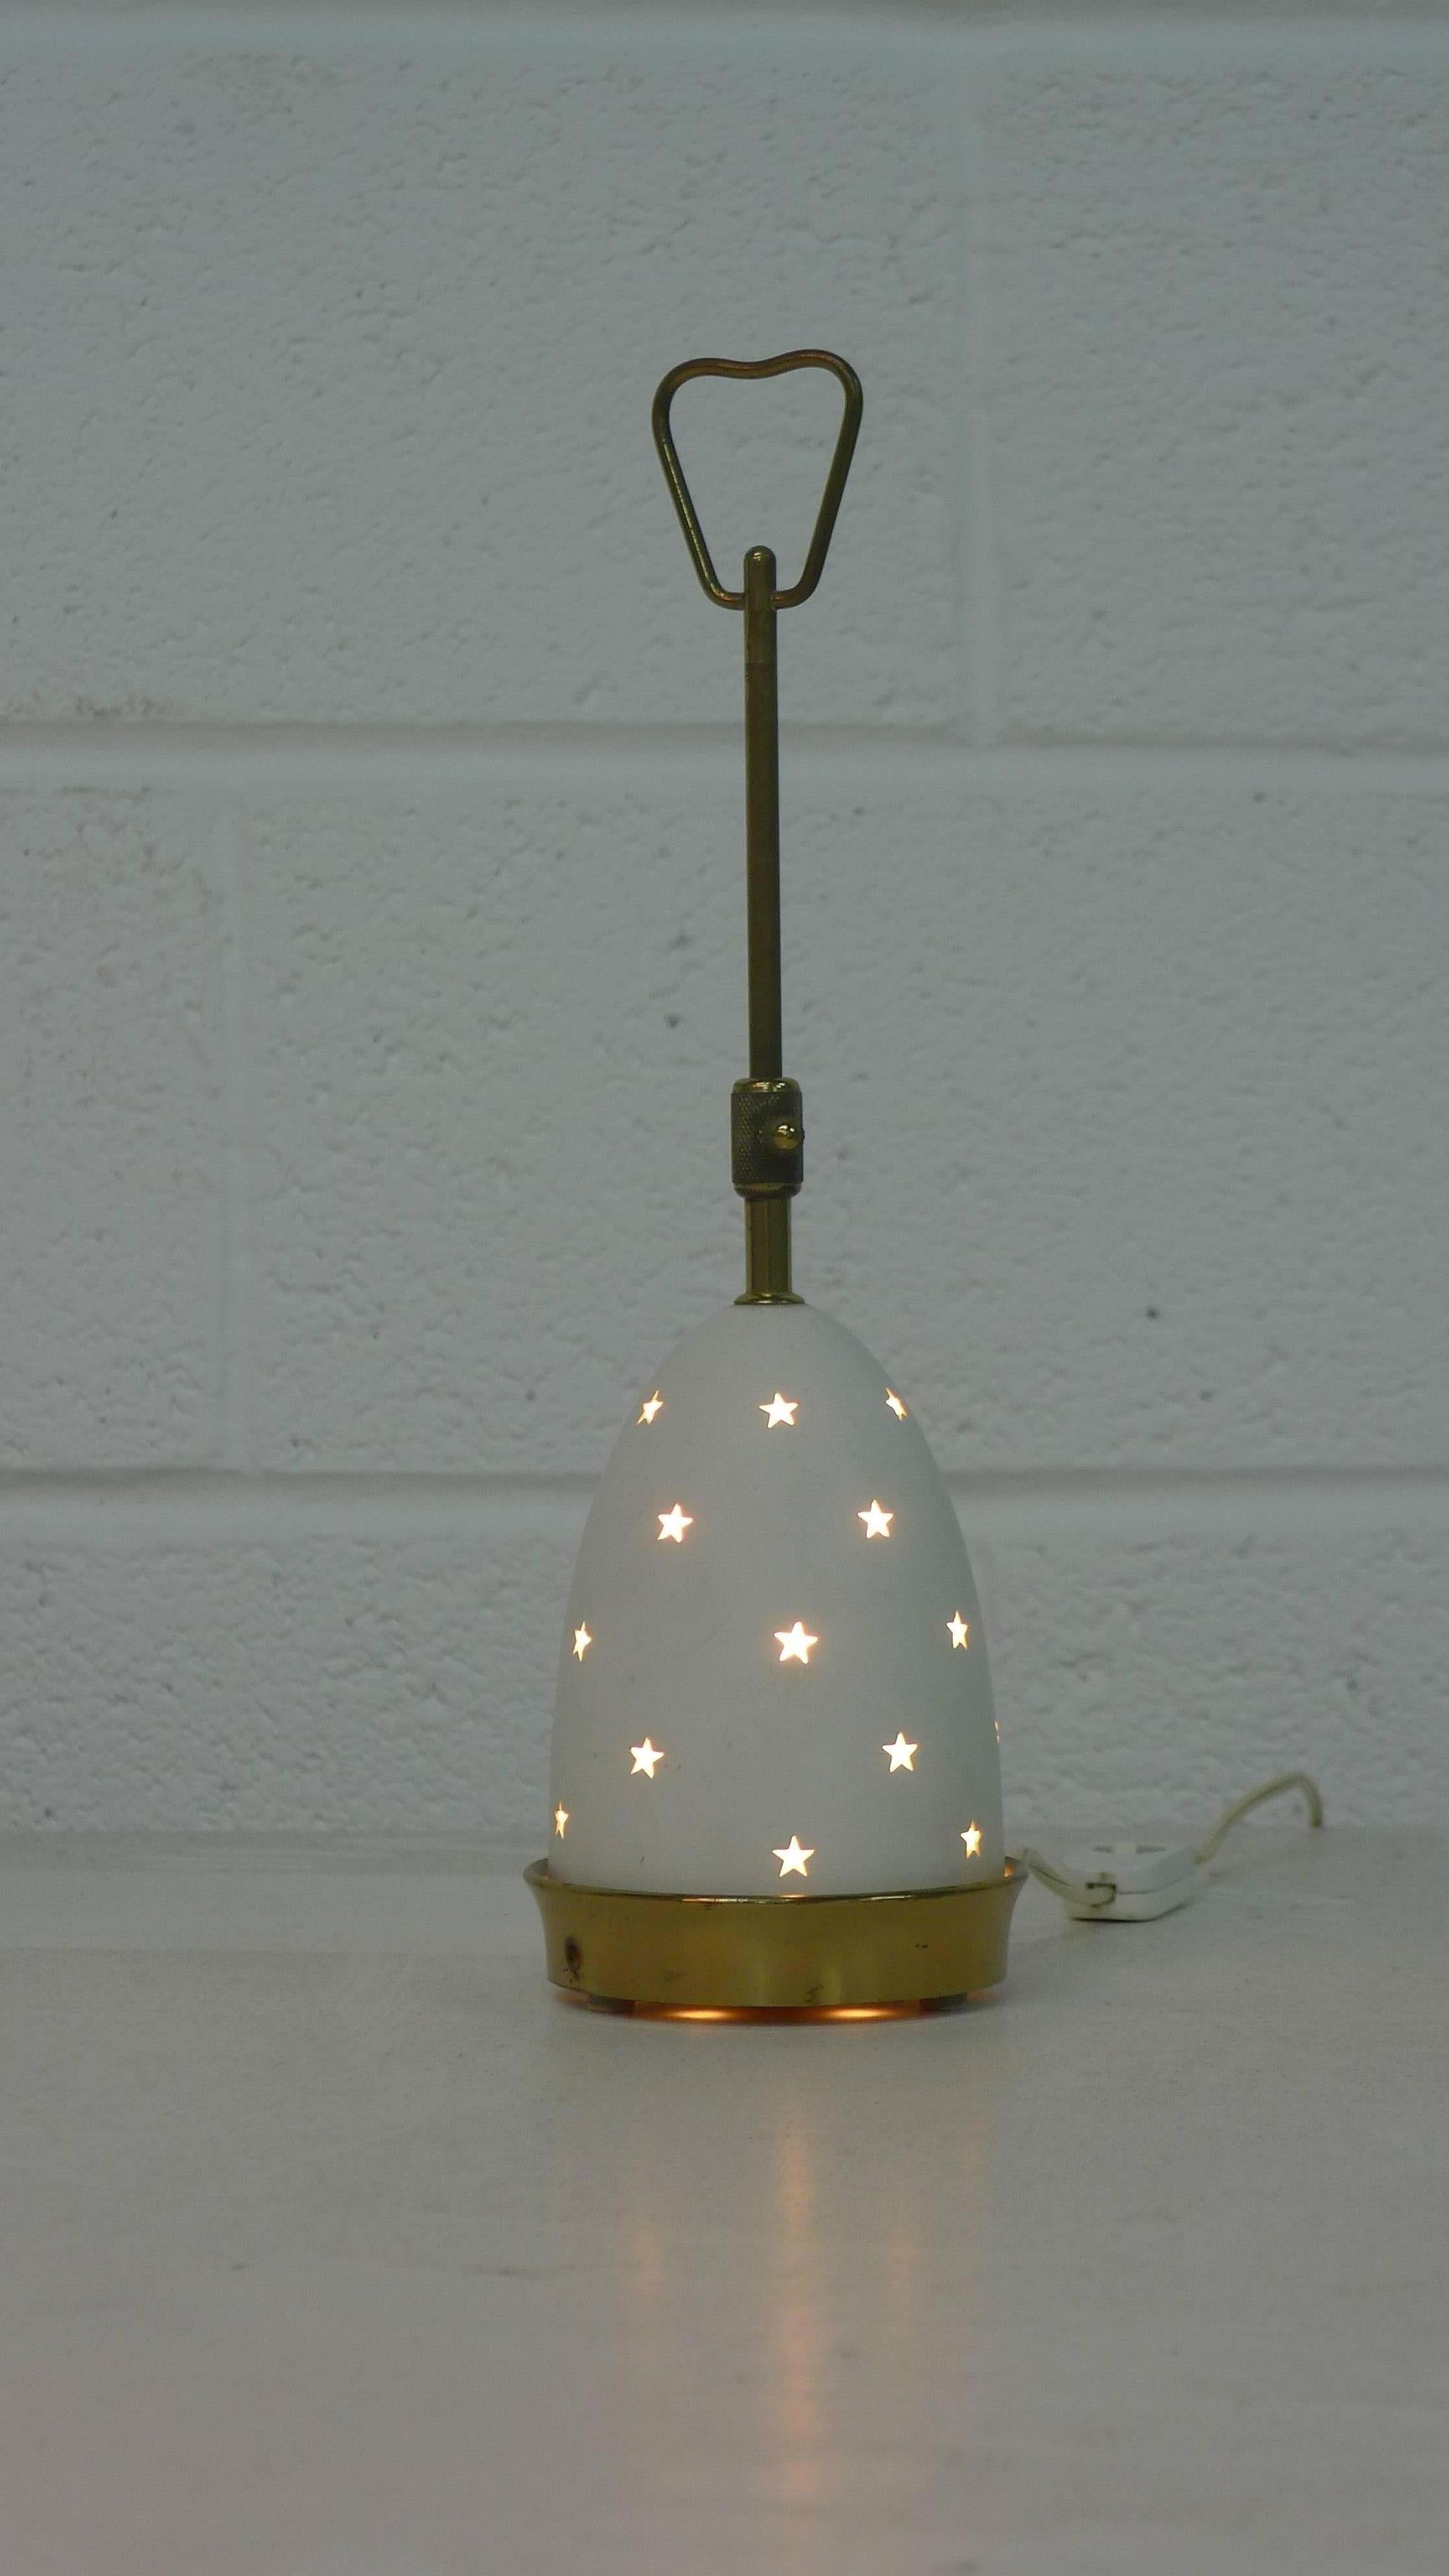 Angelo Lelii for Arredoluce, Italy, 1950s. A table lamp, model 